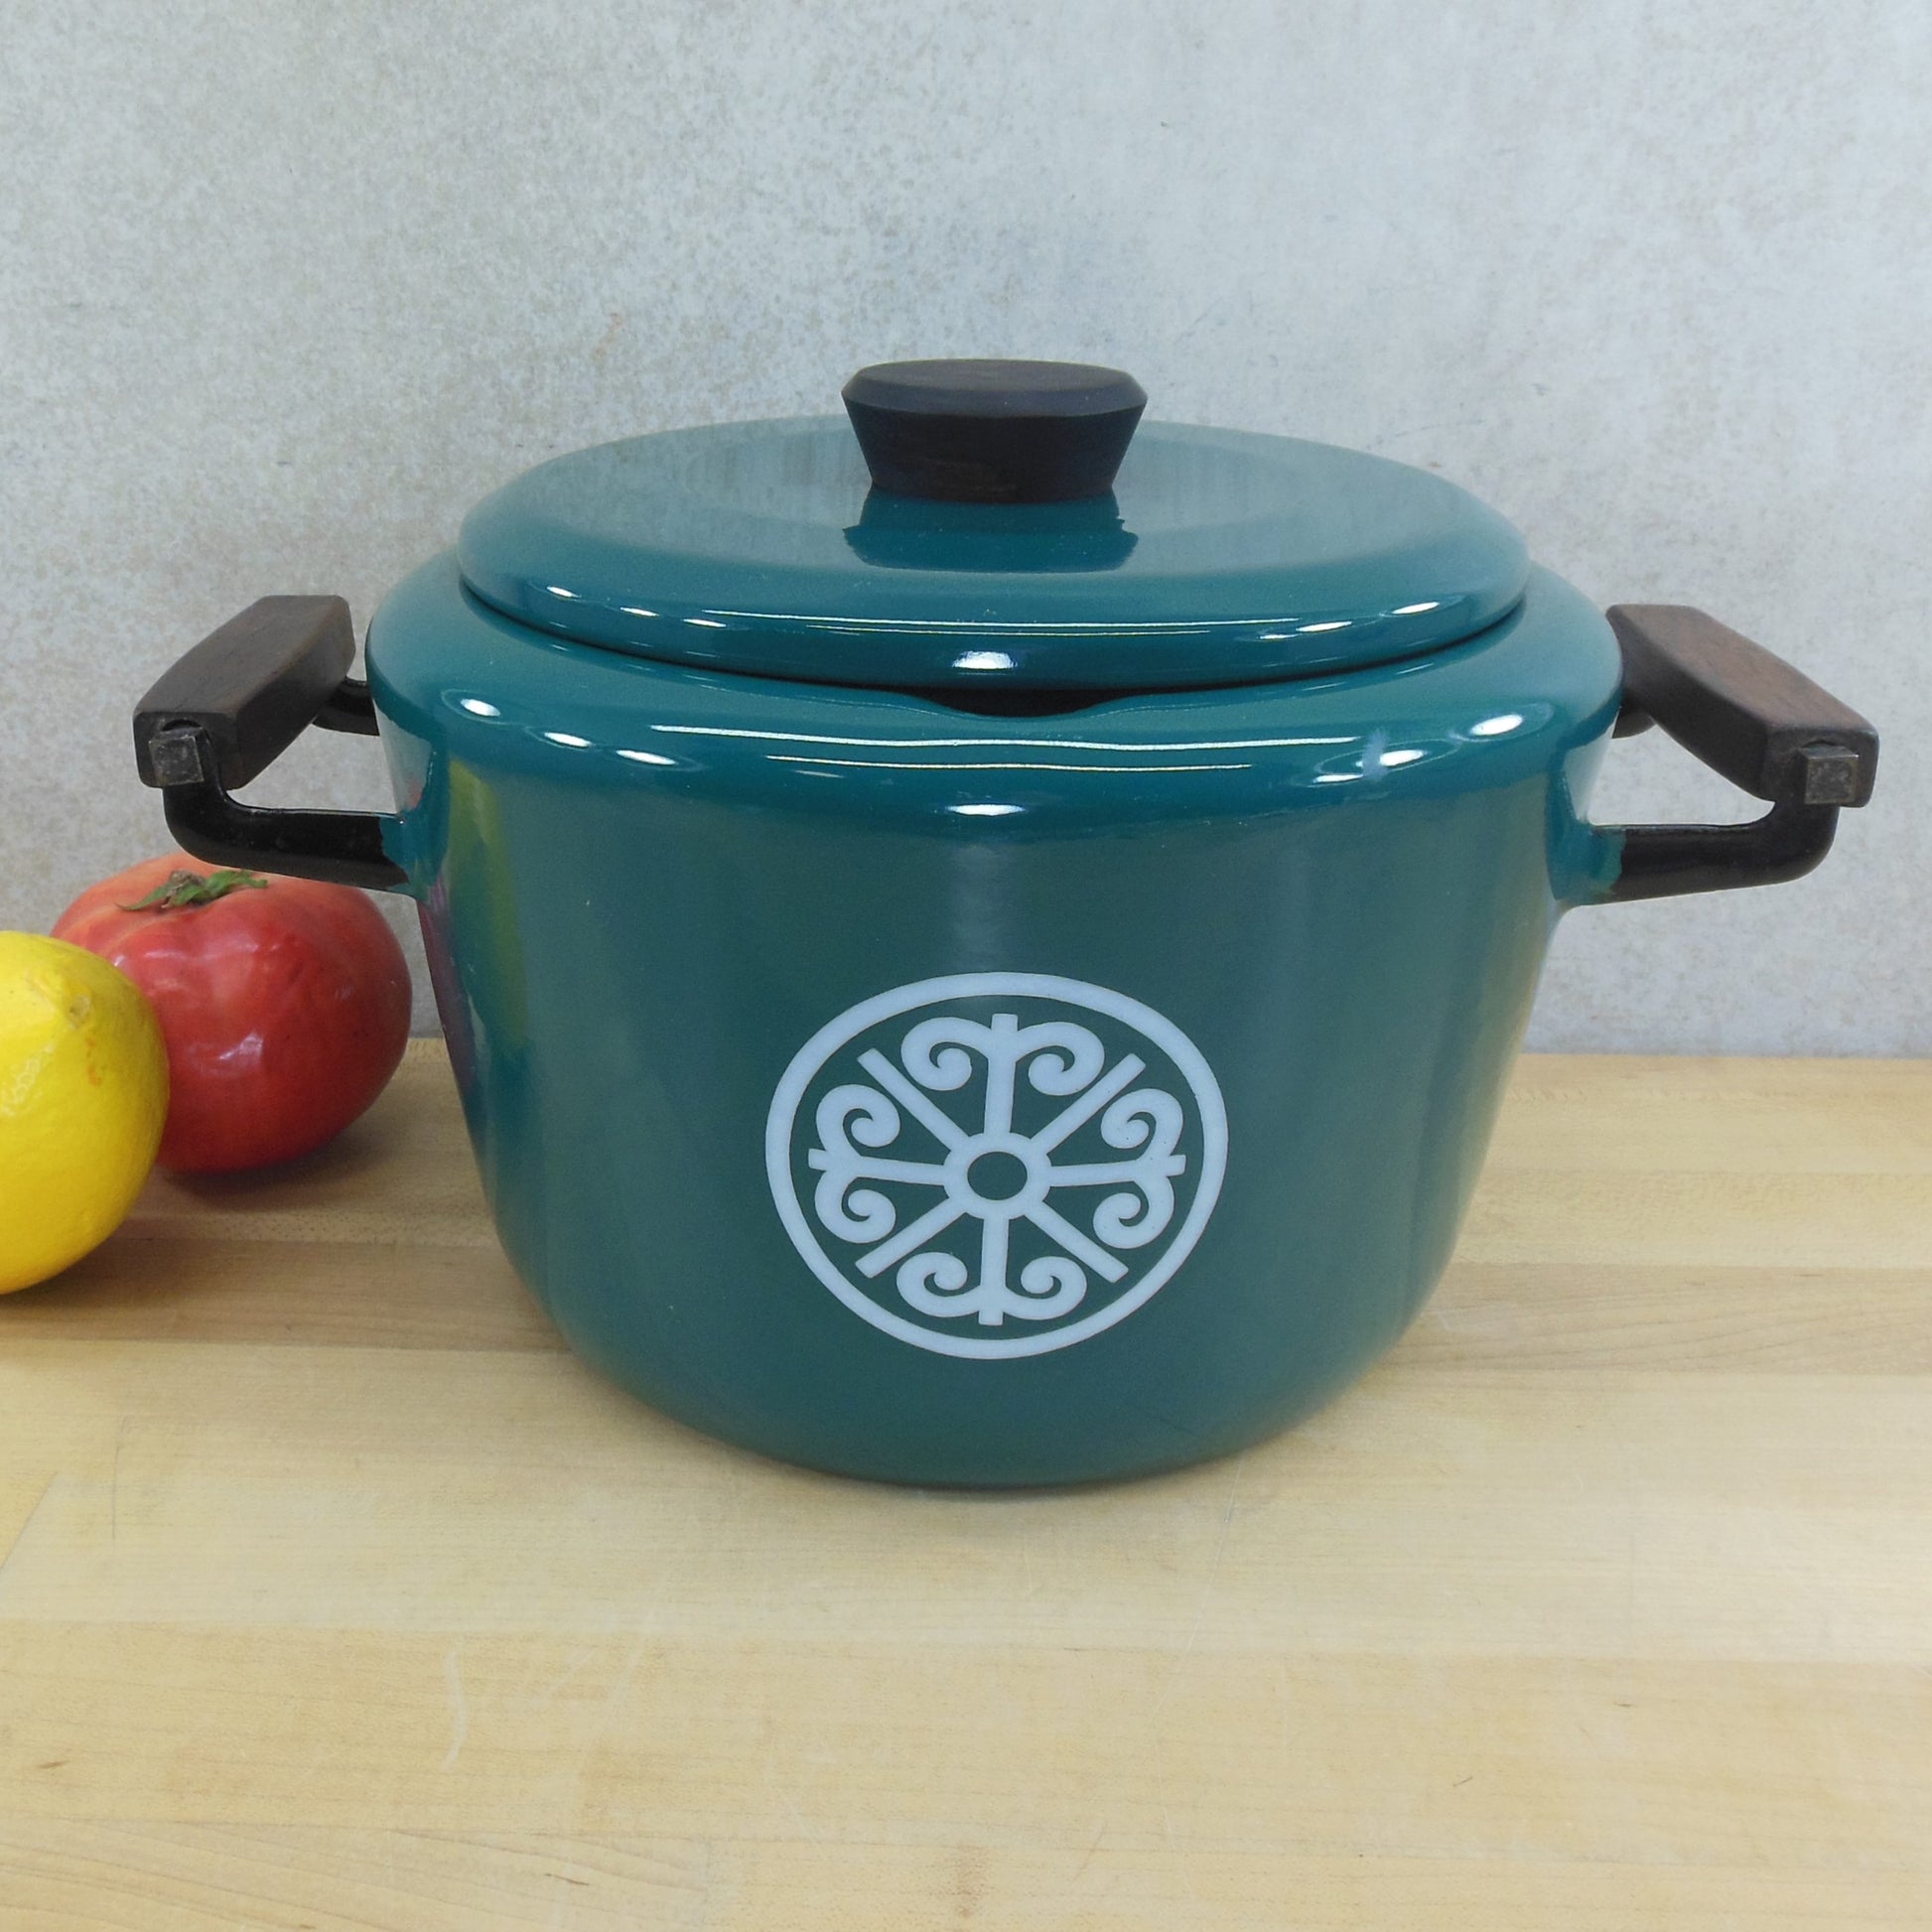 Unbranded Teal Green Enamelware 4 Quart Soup Pot Tureen Rosewood Handles Knob